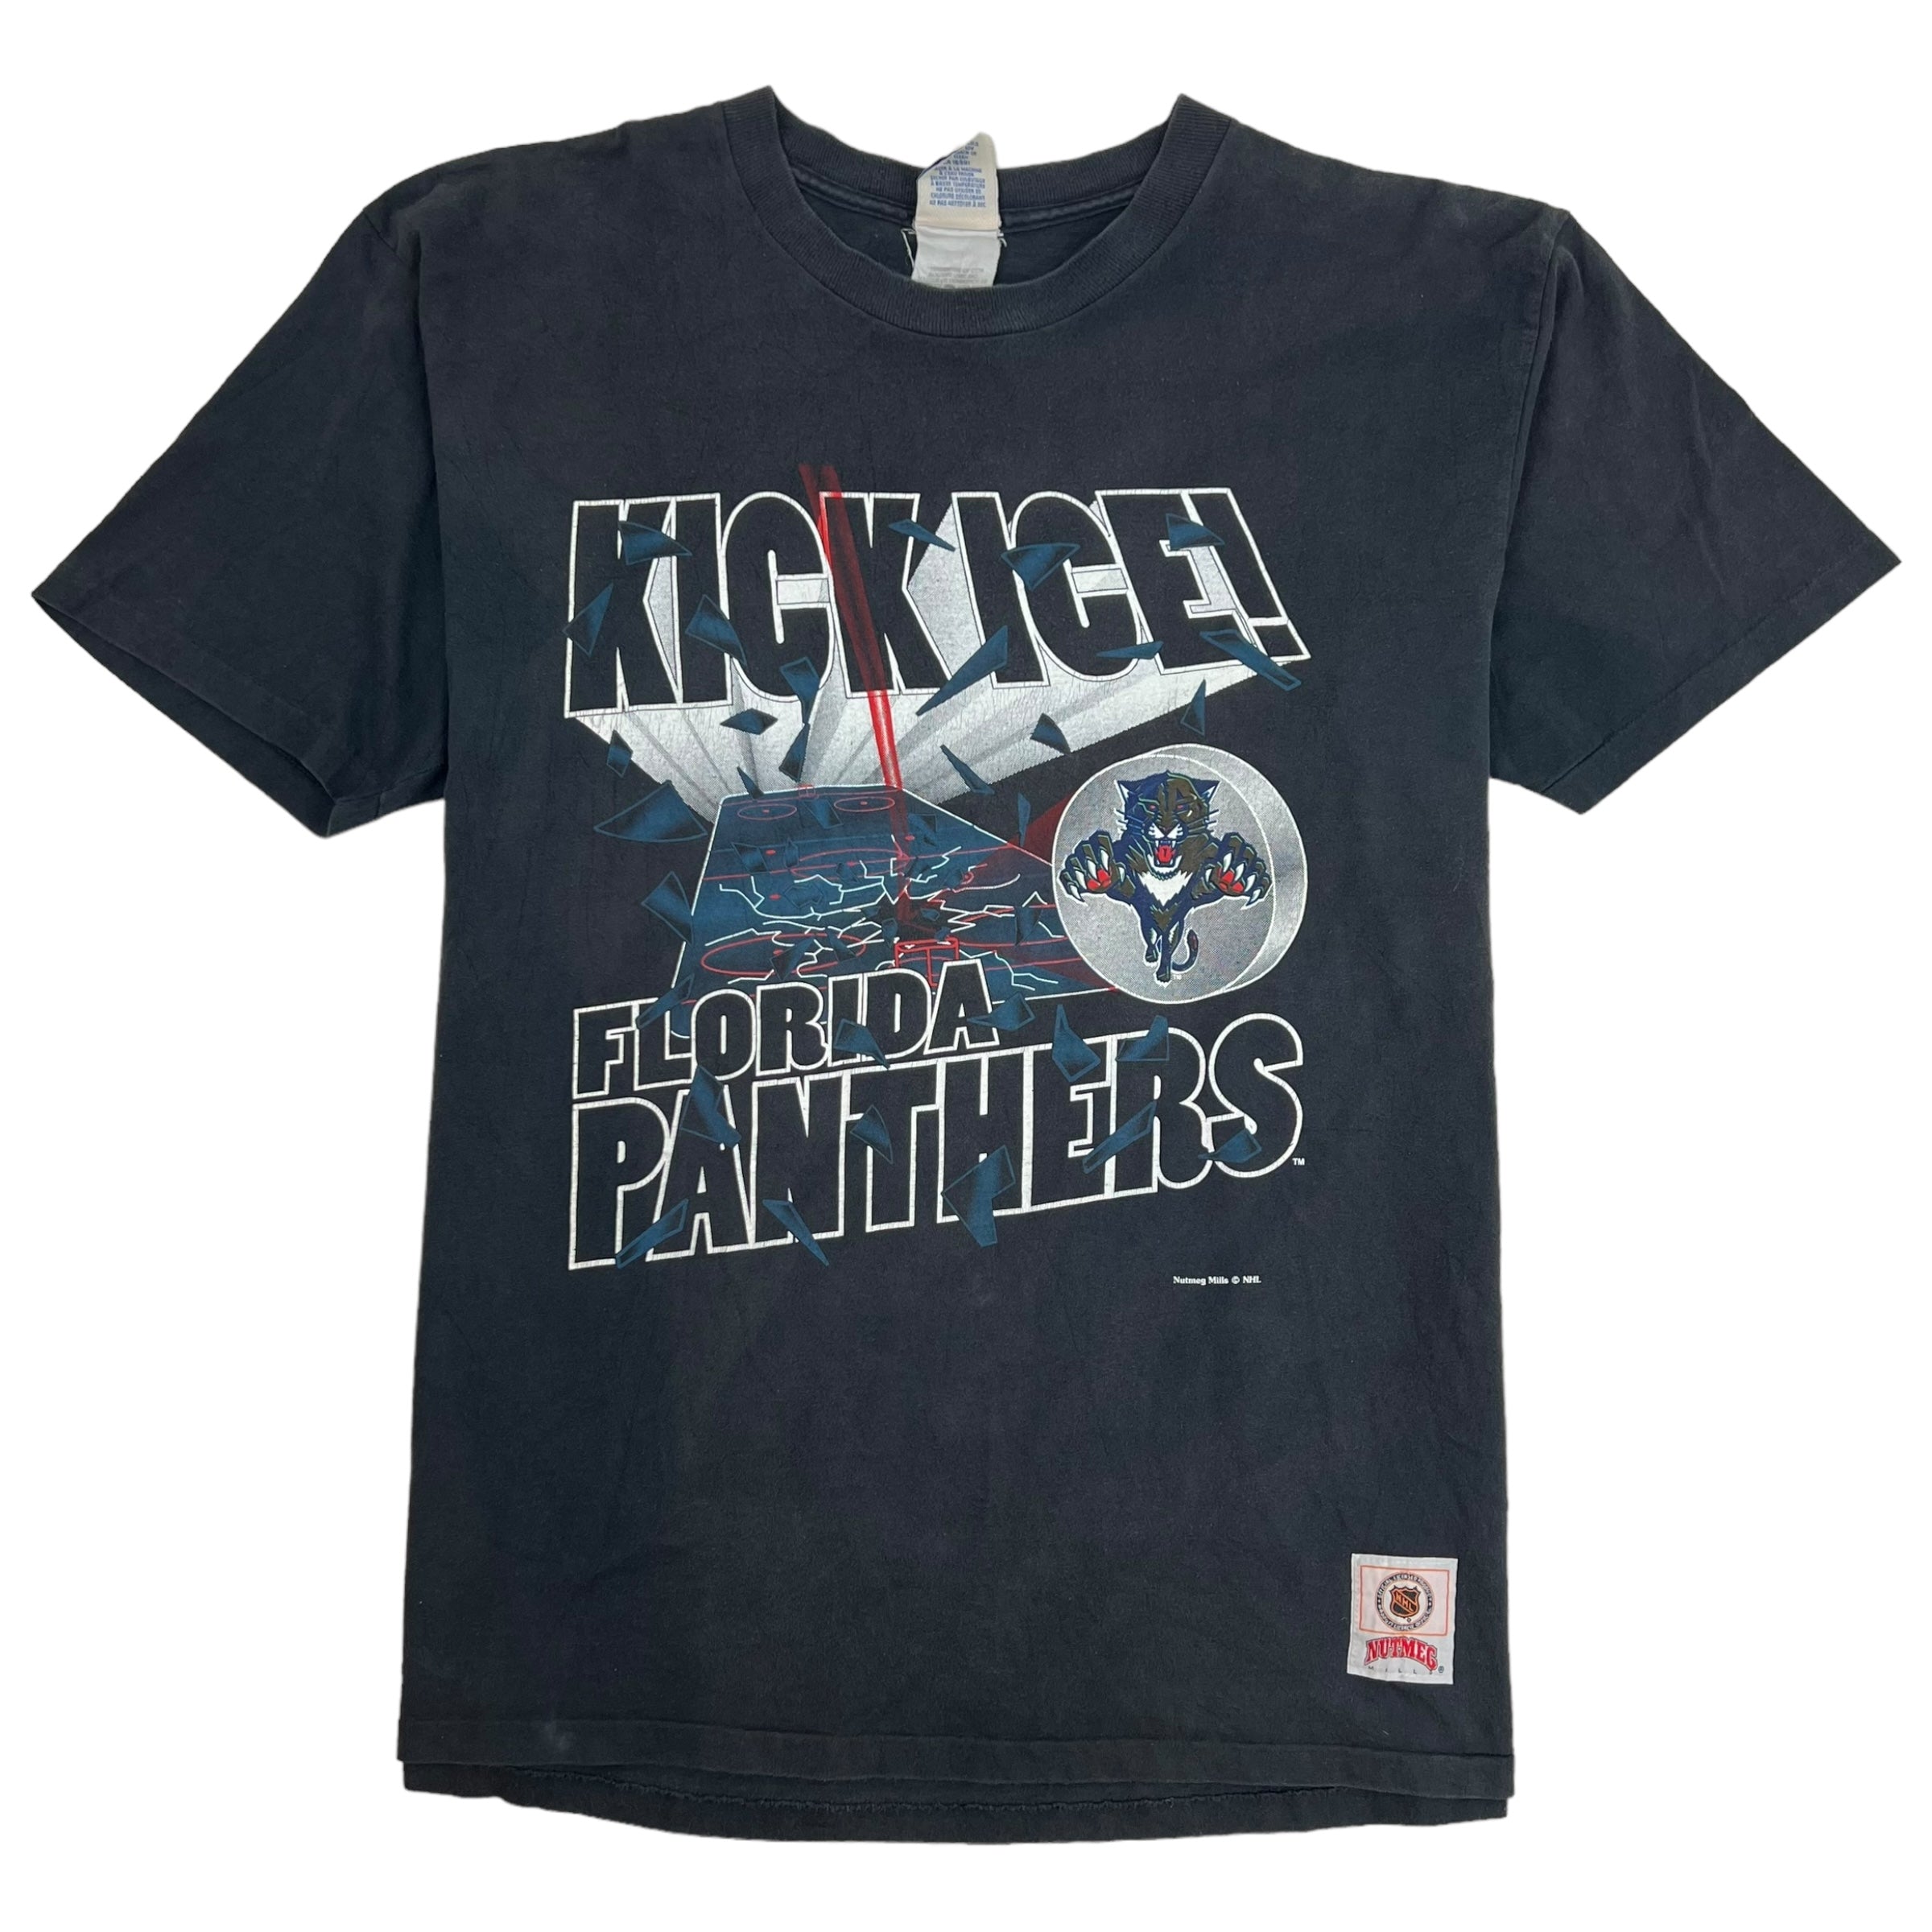 Vintage Florida Panthers "Kick Ice!" Tee